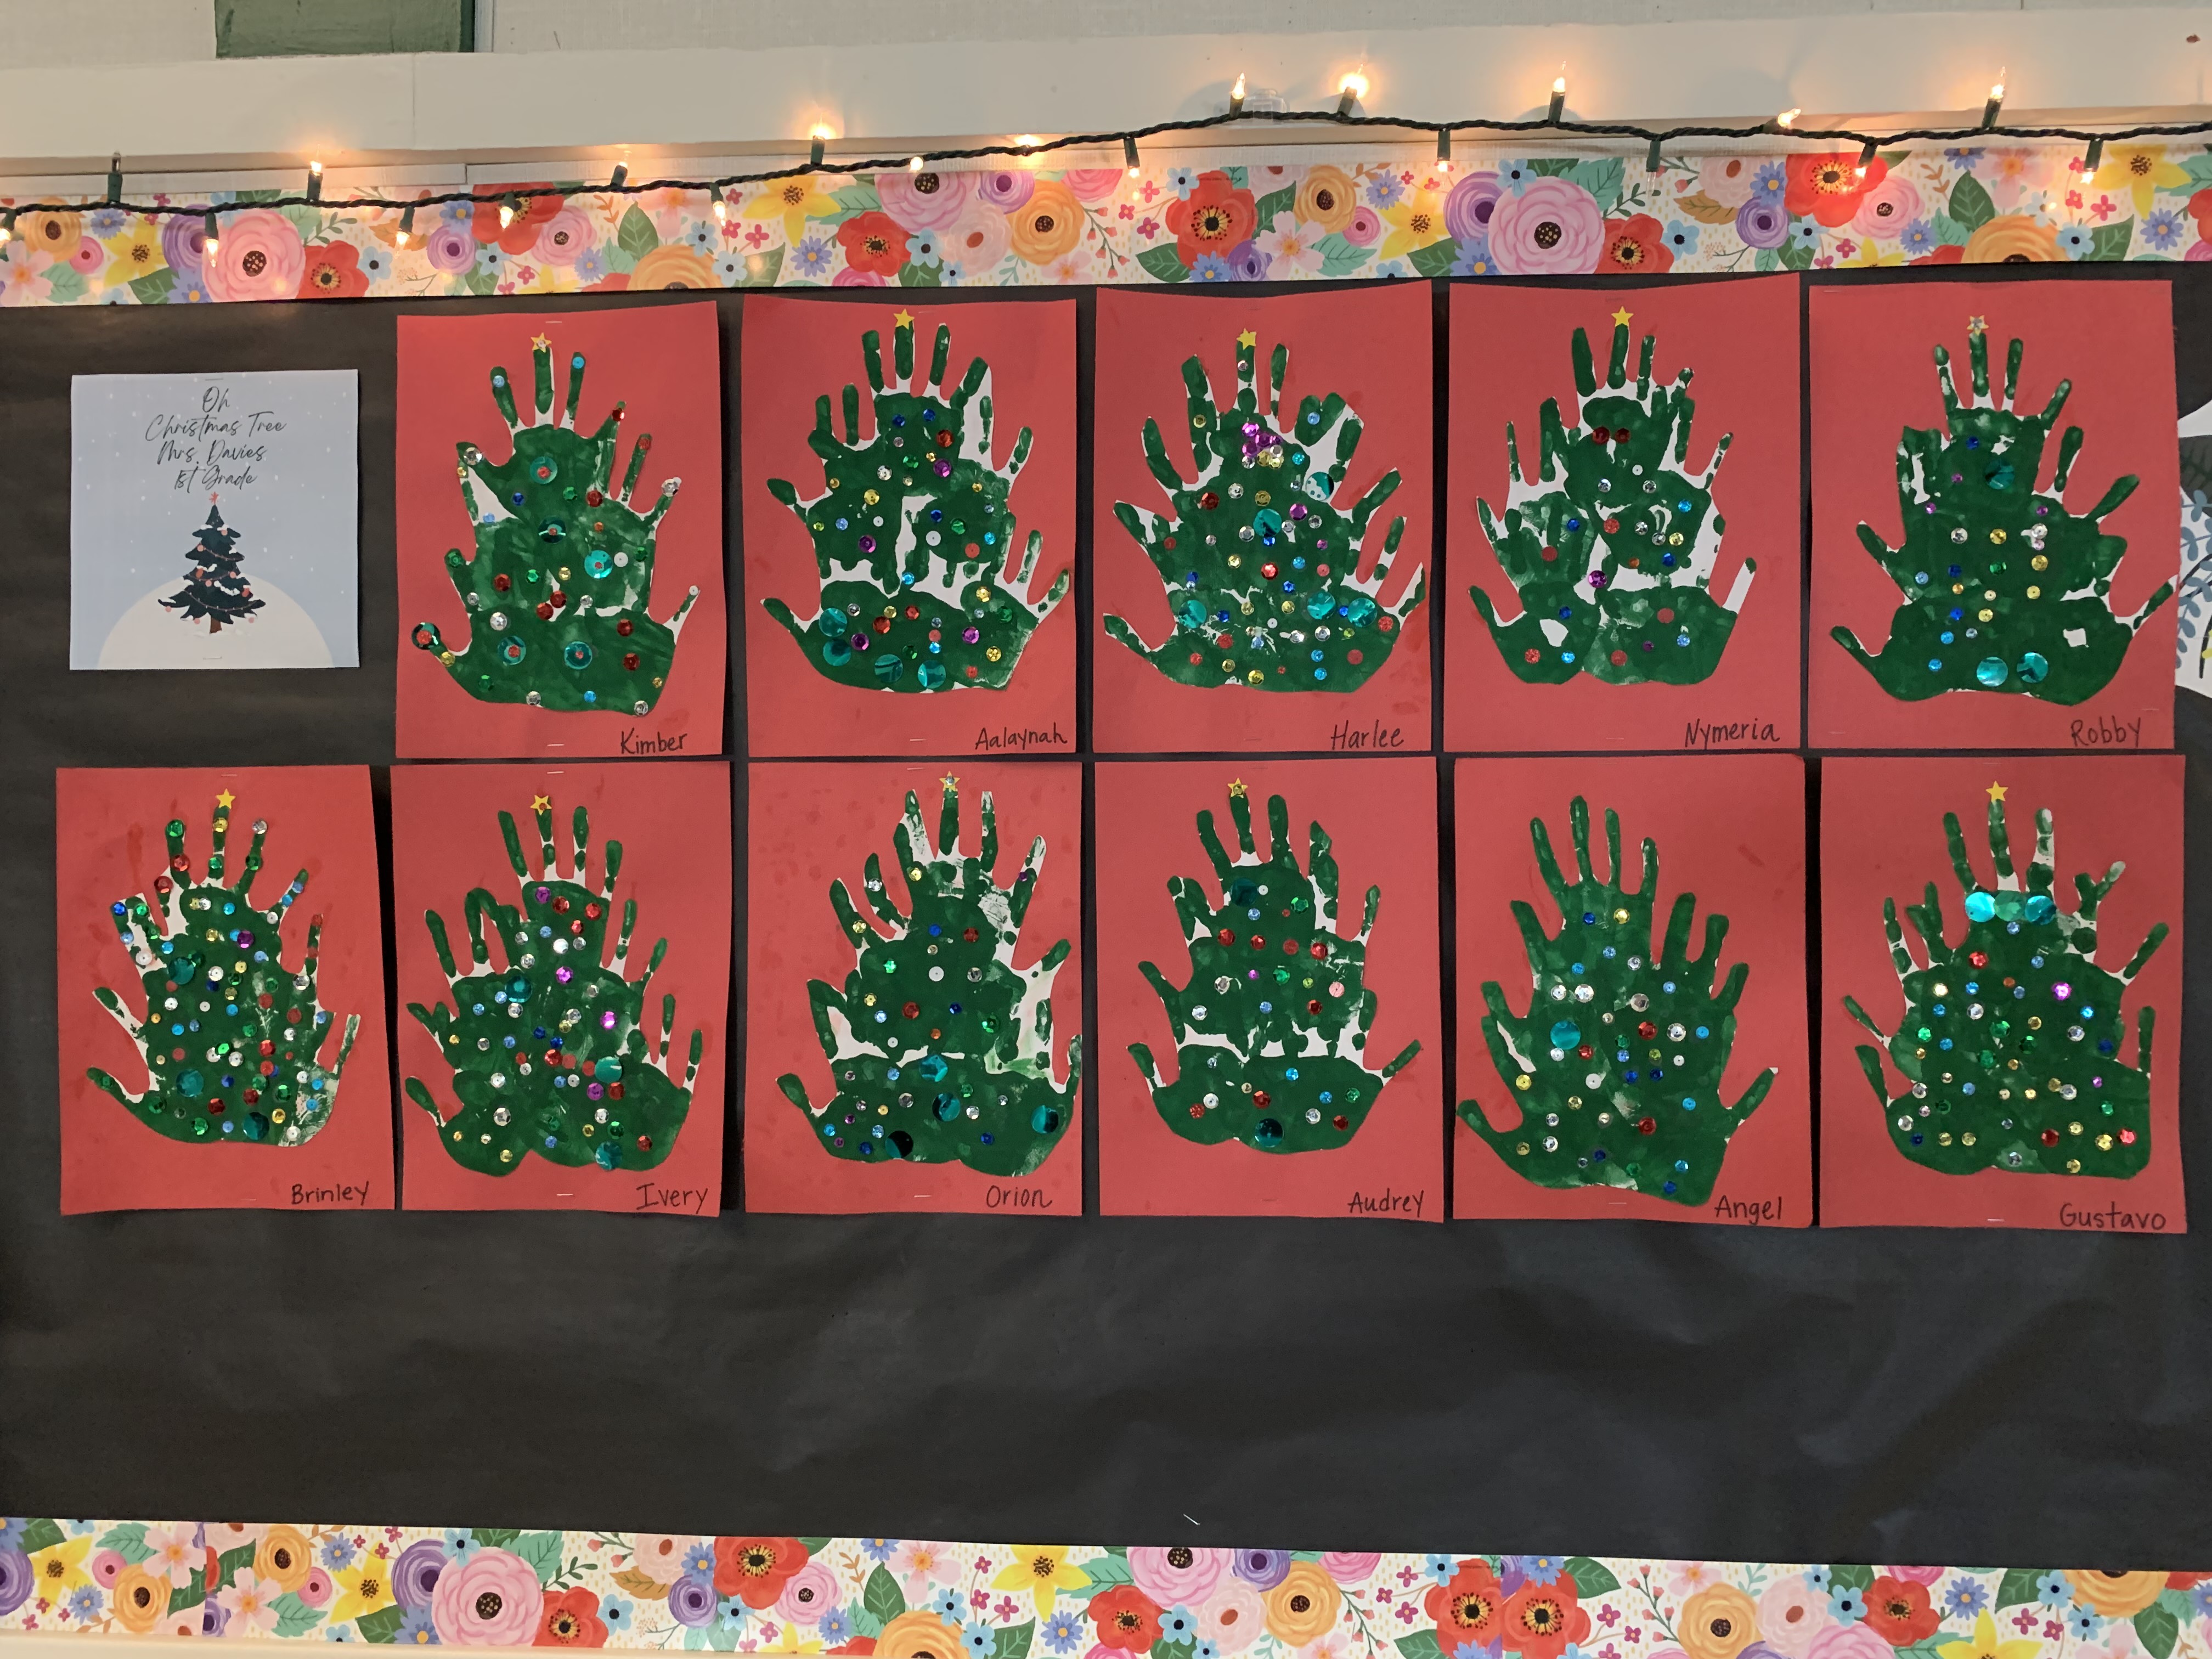 1st grade's Christmas tree artwork